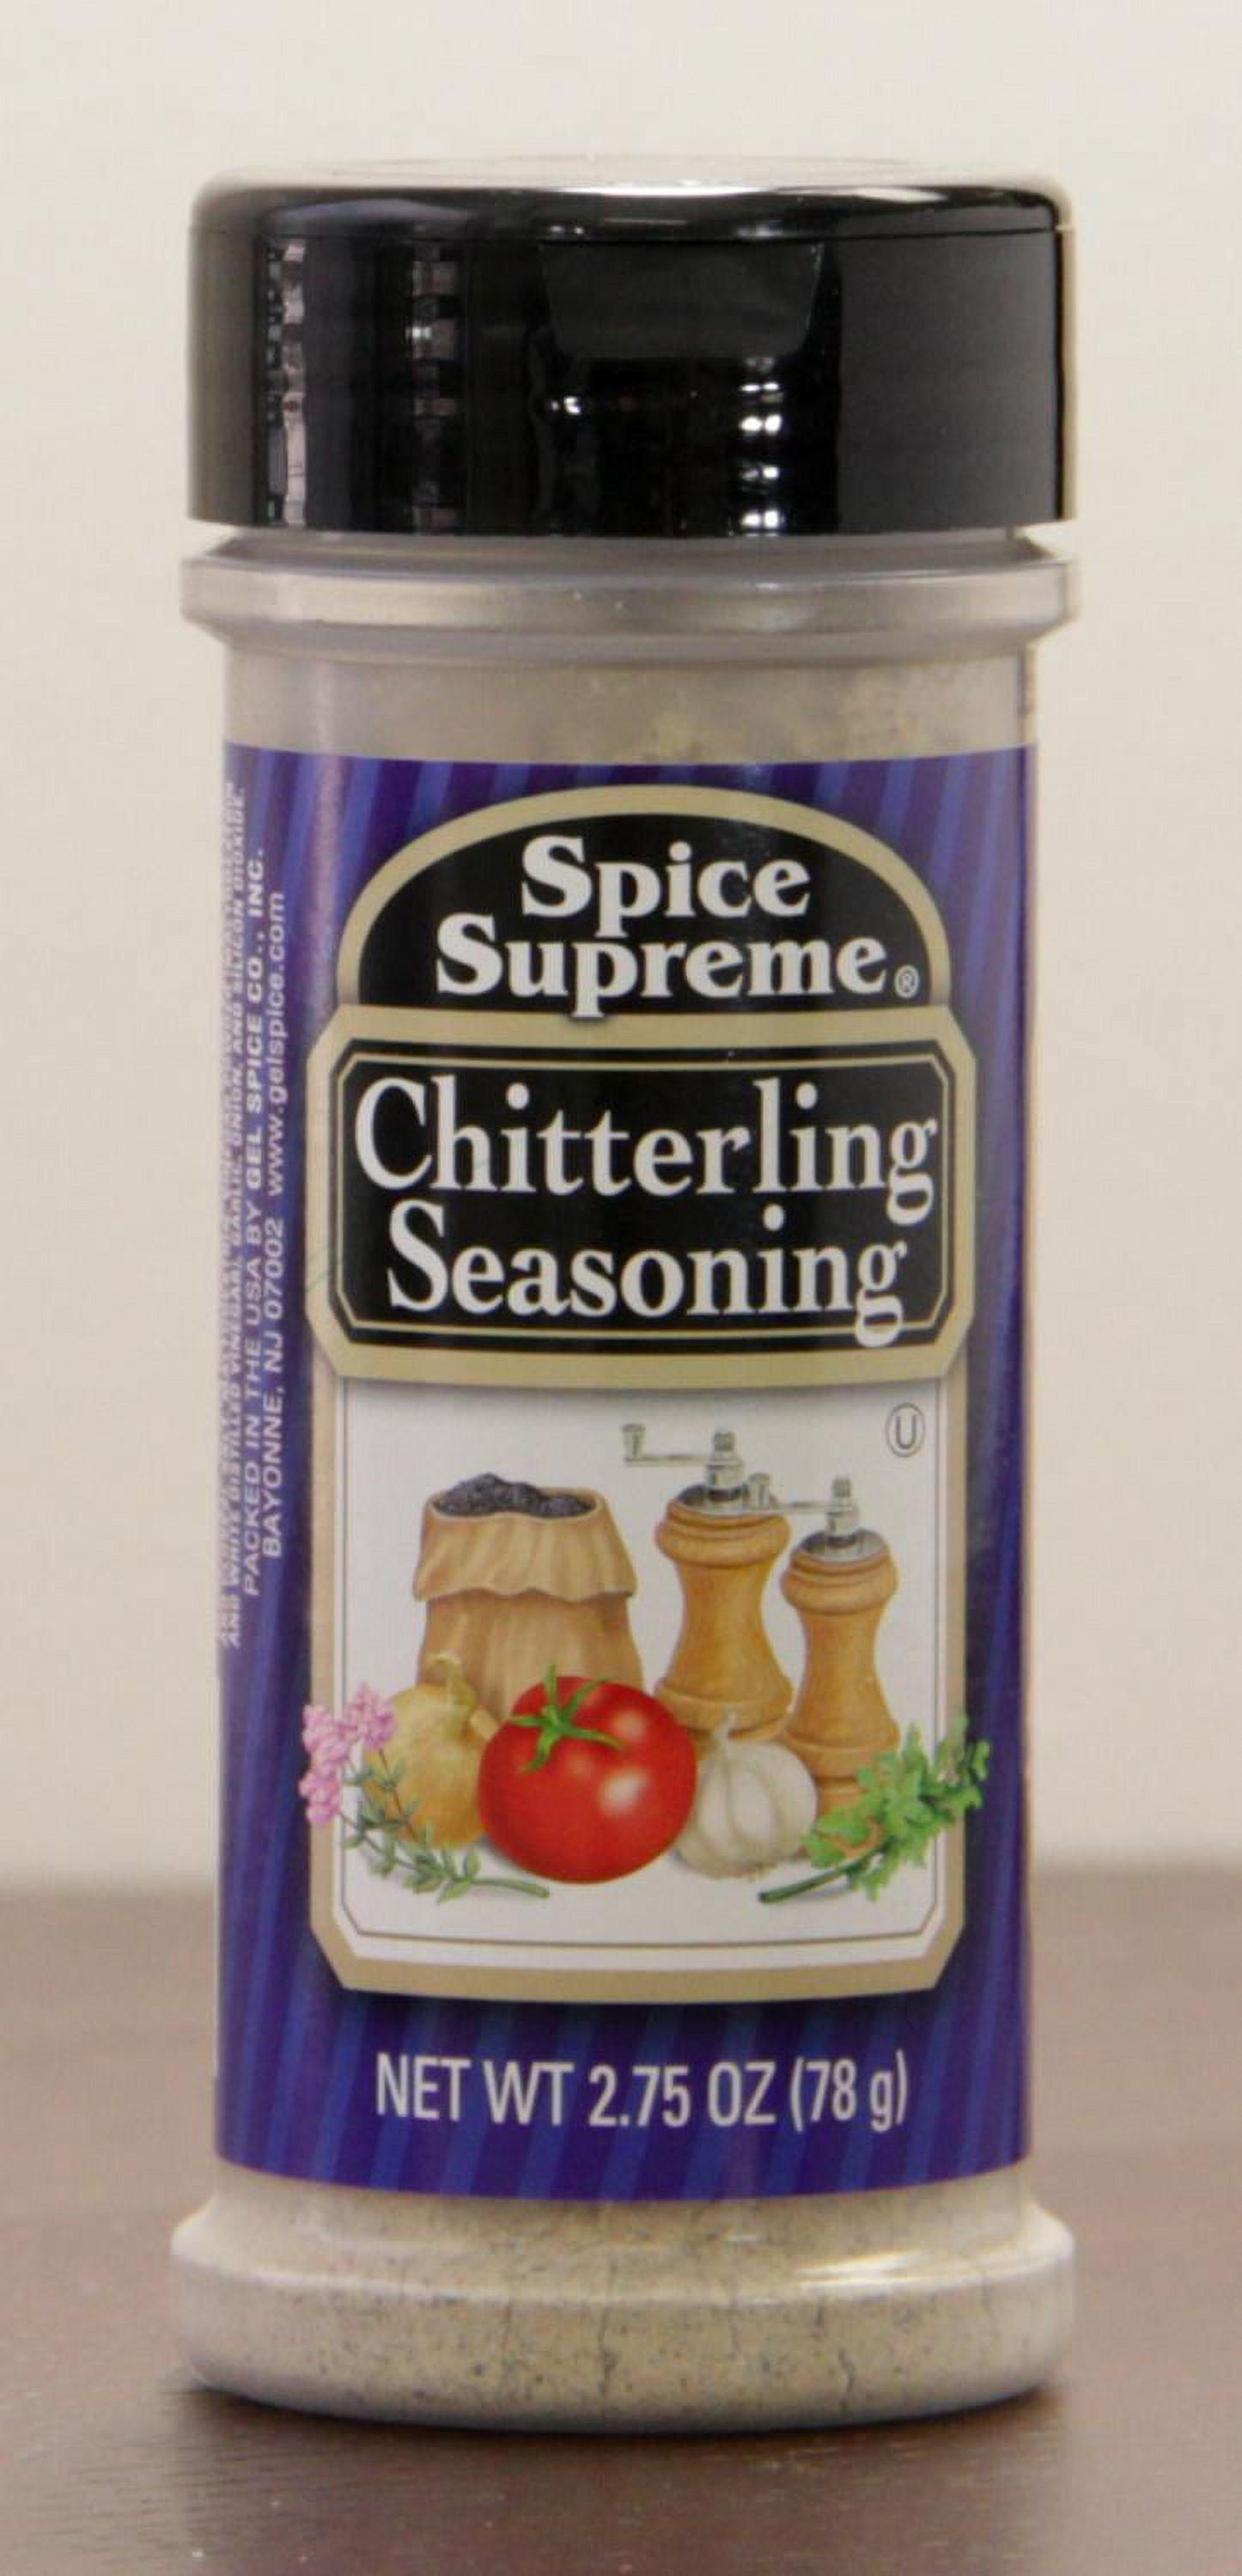 Spice Supreme SOUL FOOD, GREENS, CHITTERLING SEASONING COOKING BUNDLE - 3  PACK 